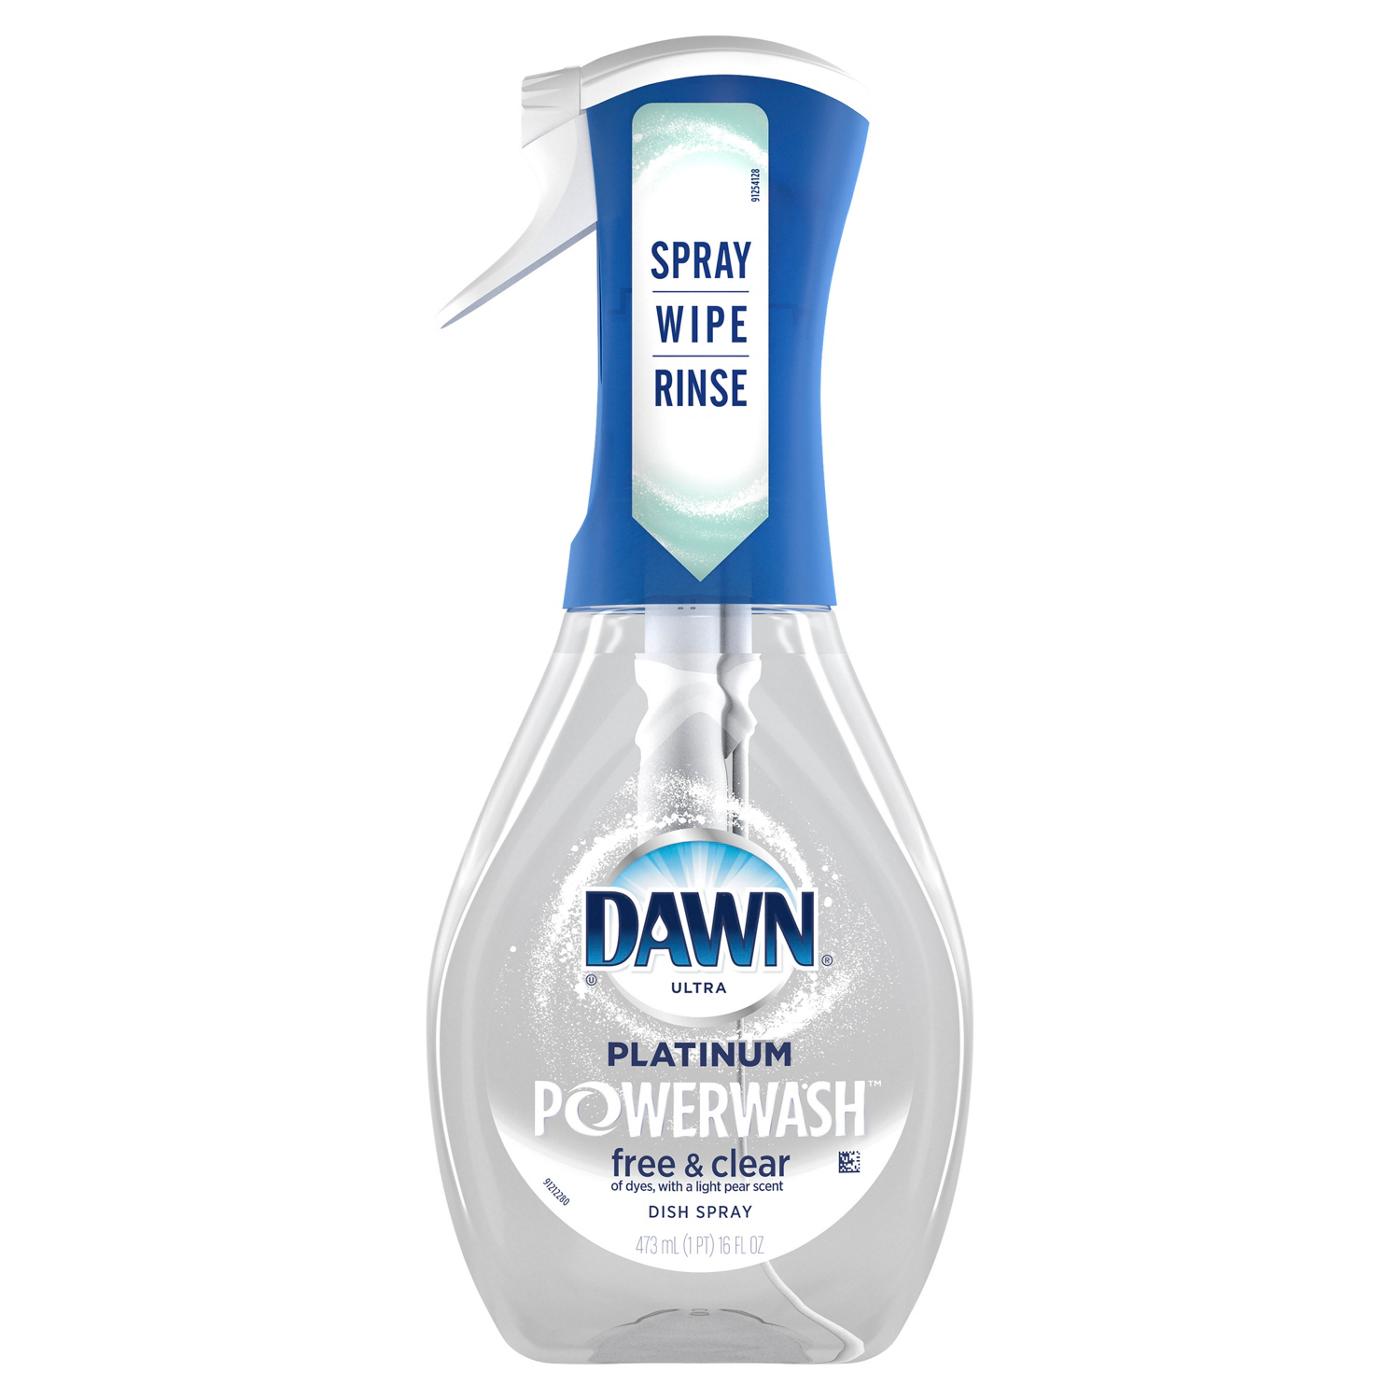 Dawn Platinum Powerwash Free & Clear Dish Spray; image 1 of 3